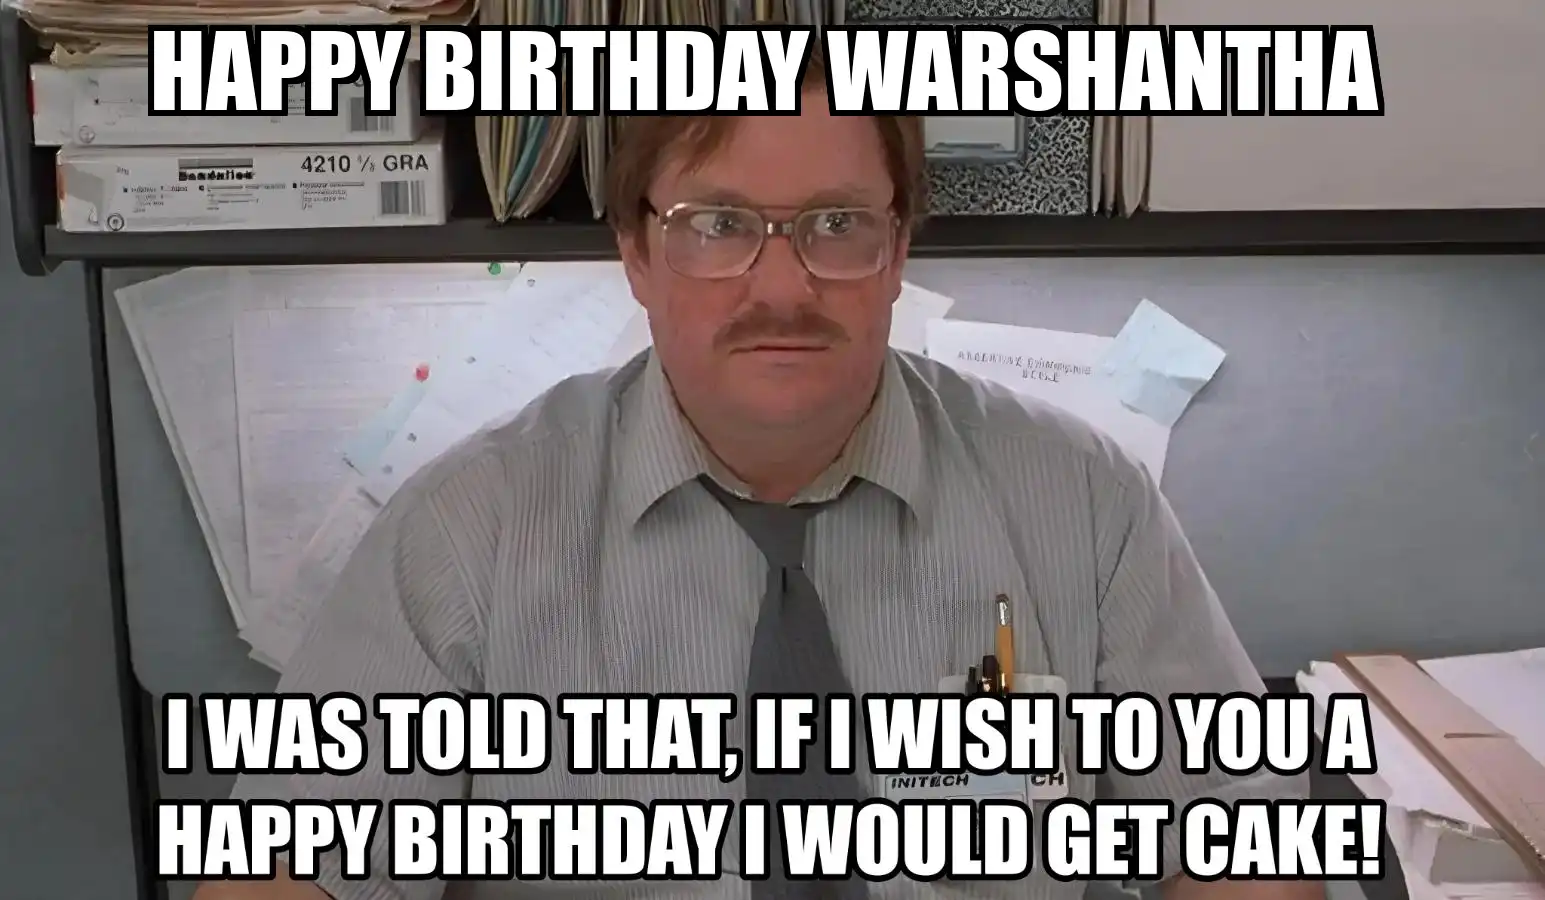 Happy Birthday Warshantha I Would Get A Cake Meme